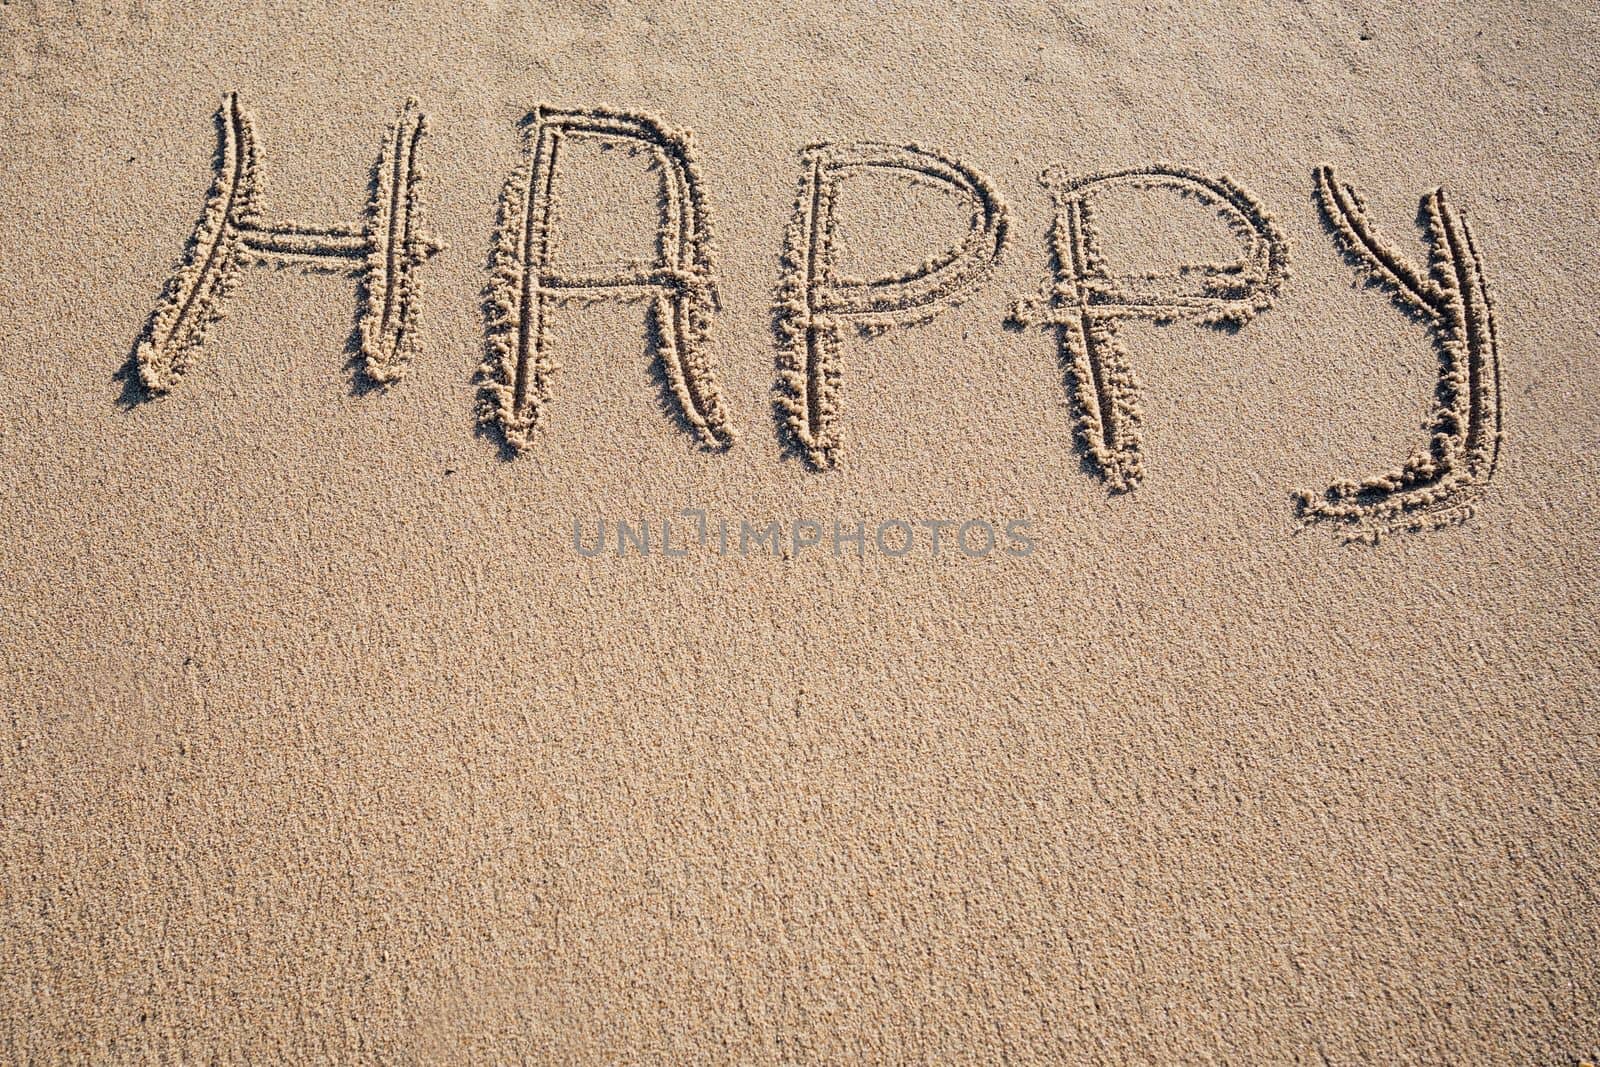 Happy word written on sand. Travel summer beach vacation concept.